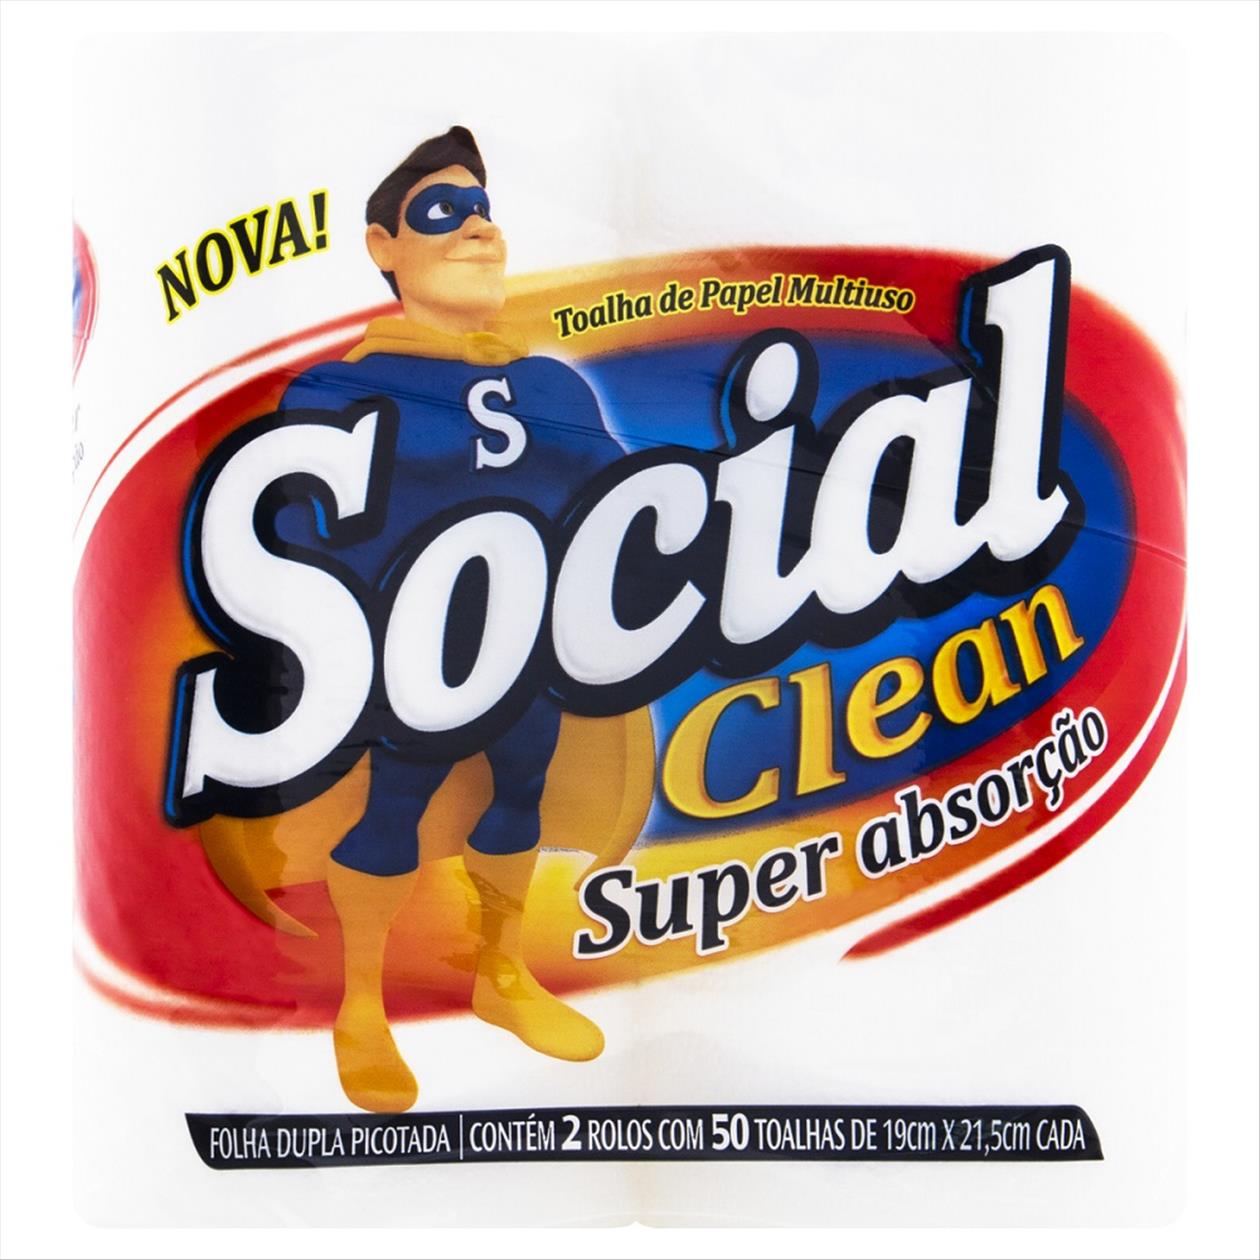 Papel toalha folha dupla de picotar Social Clean com 2 rolos de 50 folhas -  CCL Distribuidora